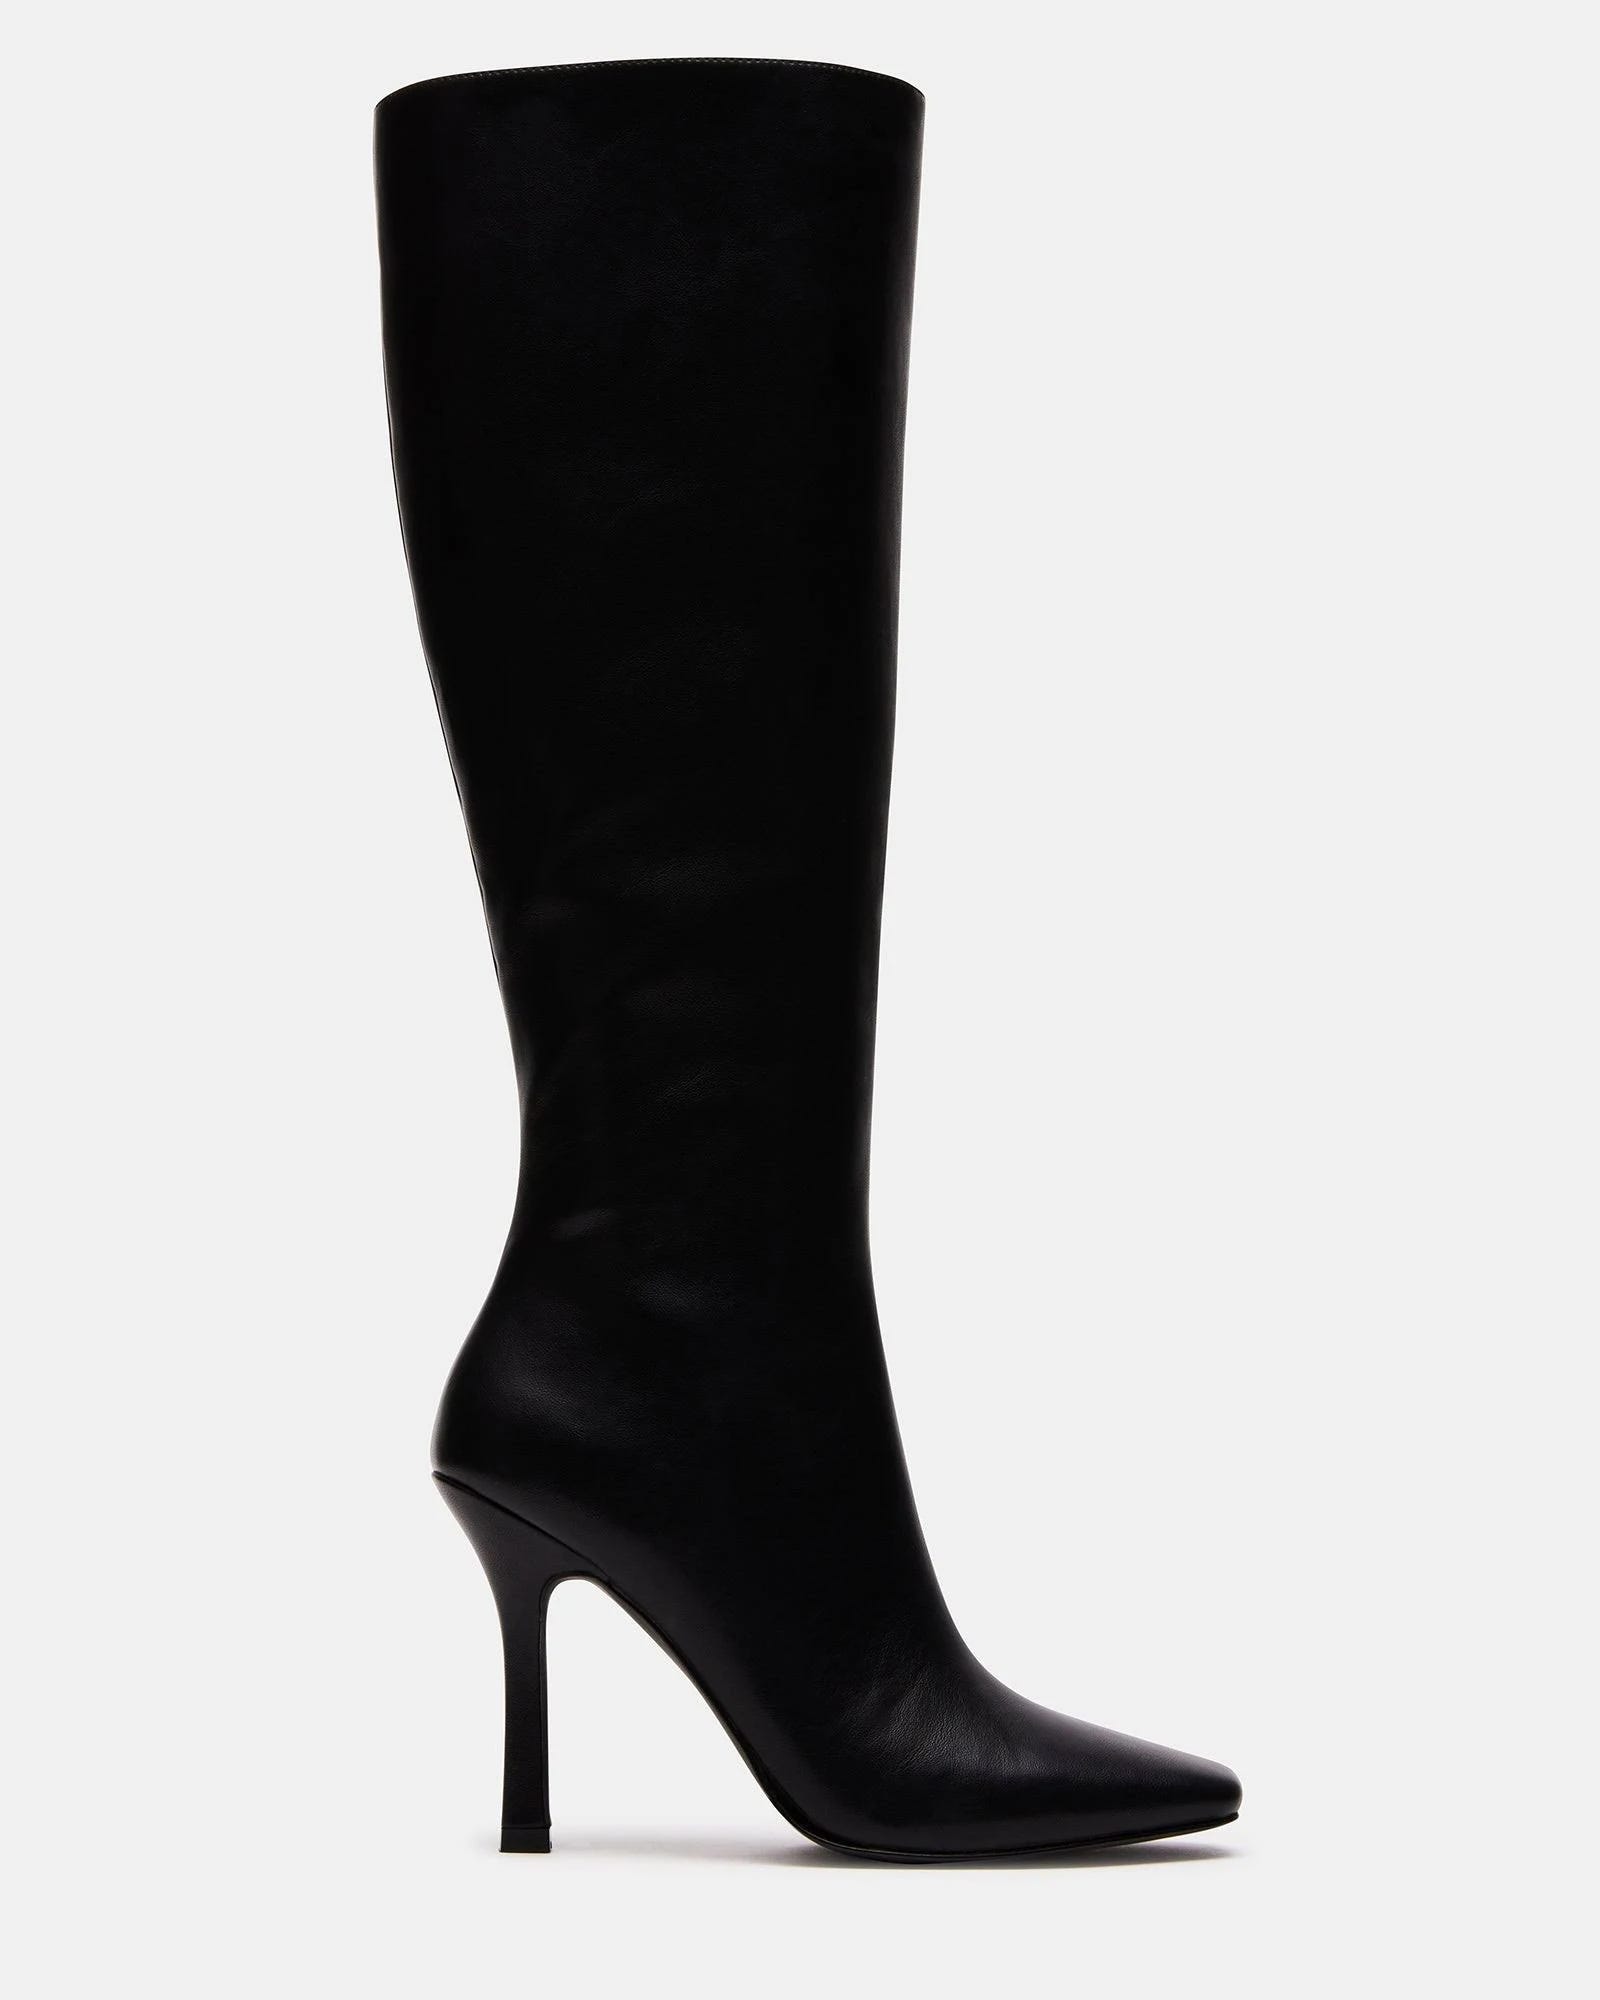 Fashionable Steve Madden Black Heel Boots | Image